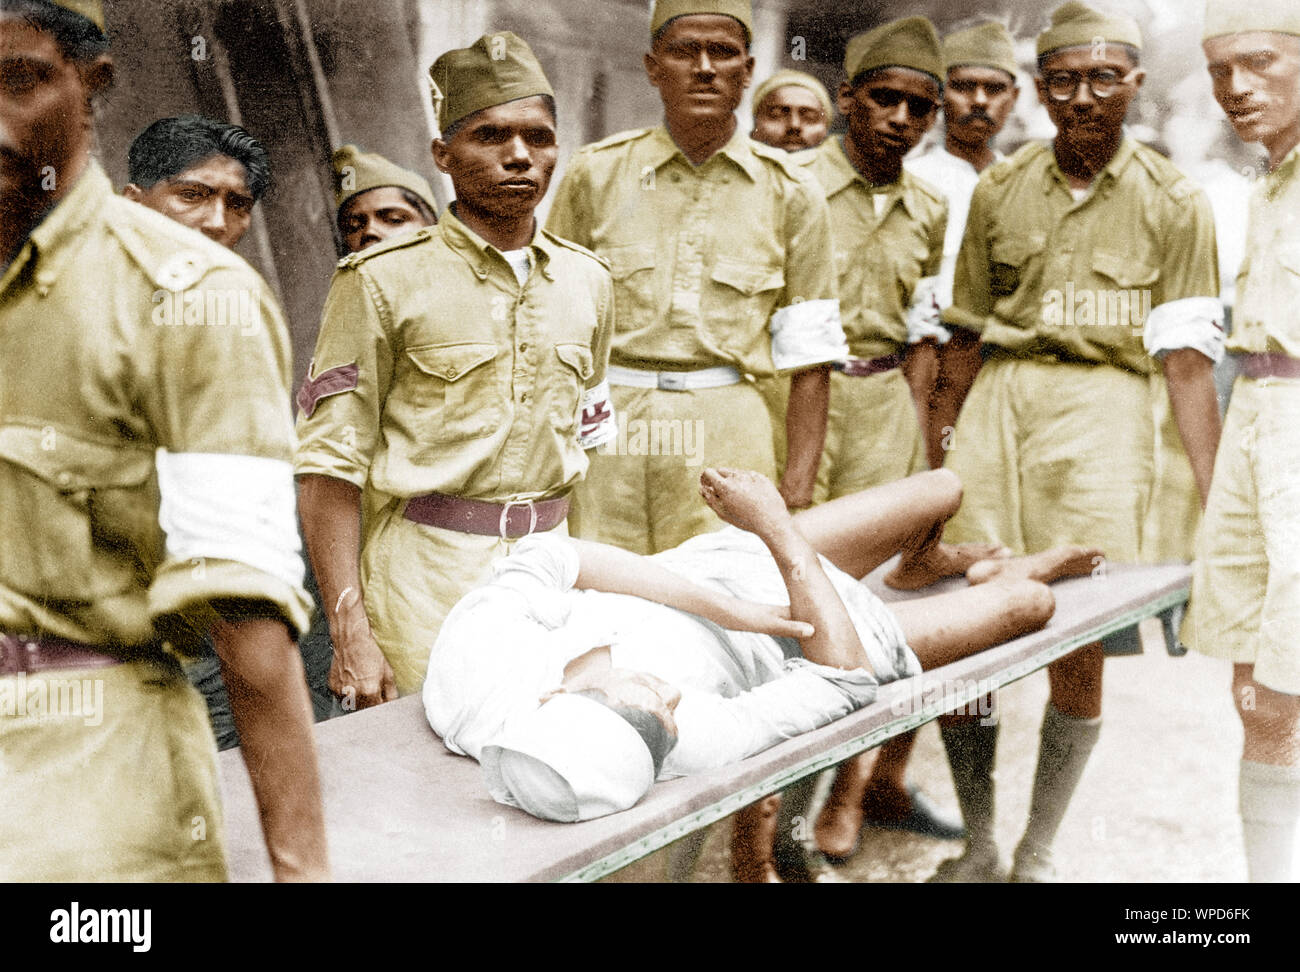 Verletzte Satyagrahi sein Weg auf Keilrahmen, Indien, Asien, Mai 1930 Stockfoto